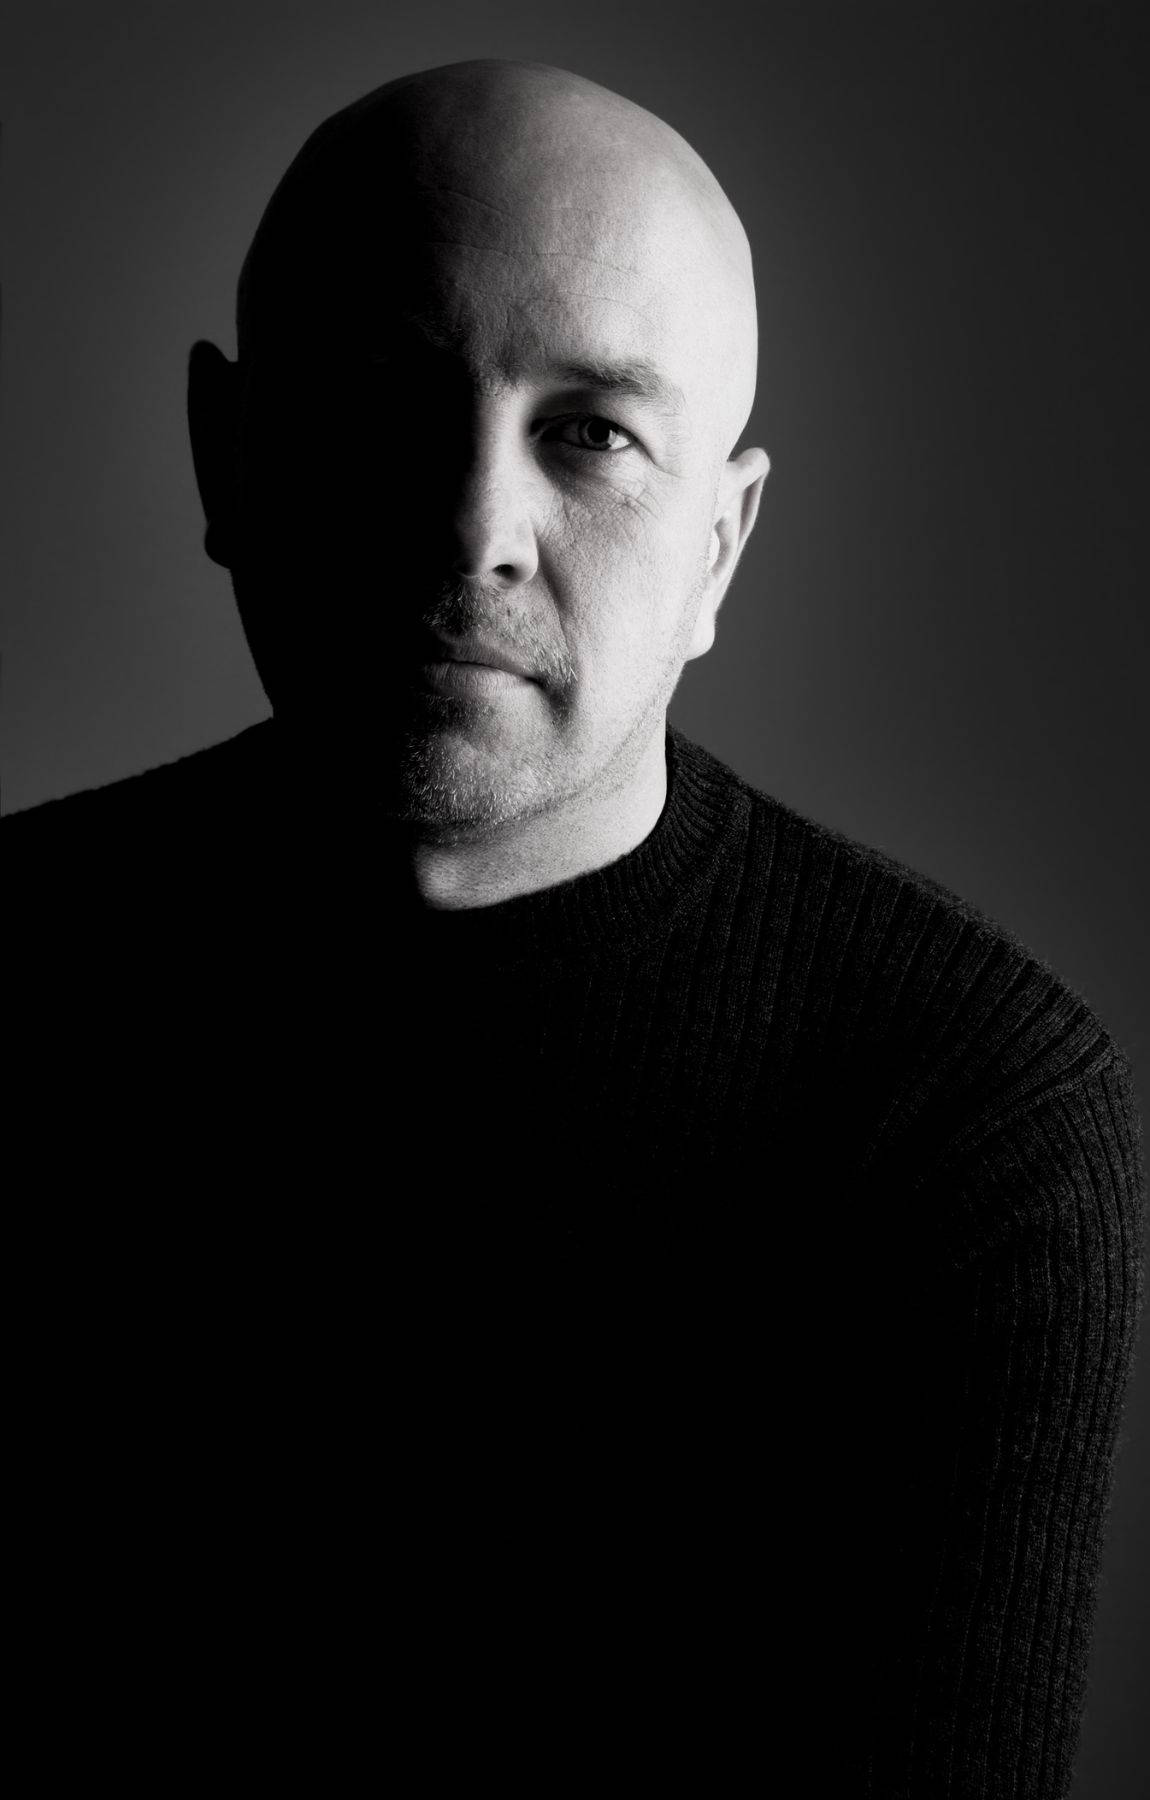 Bald Man In Grayscale Portrait Photograph Wallpaper